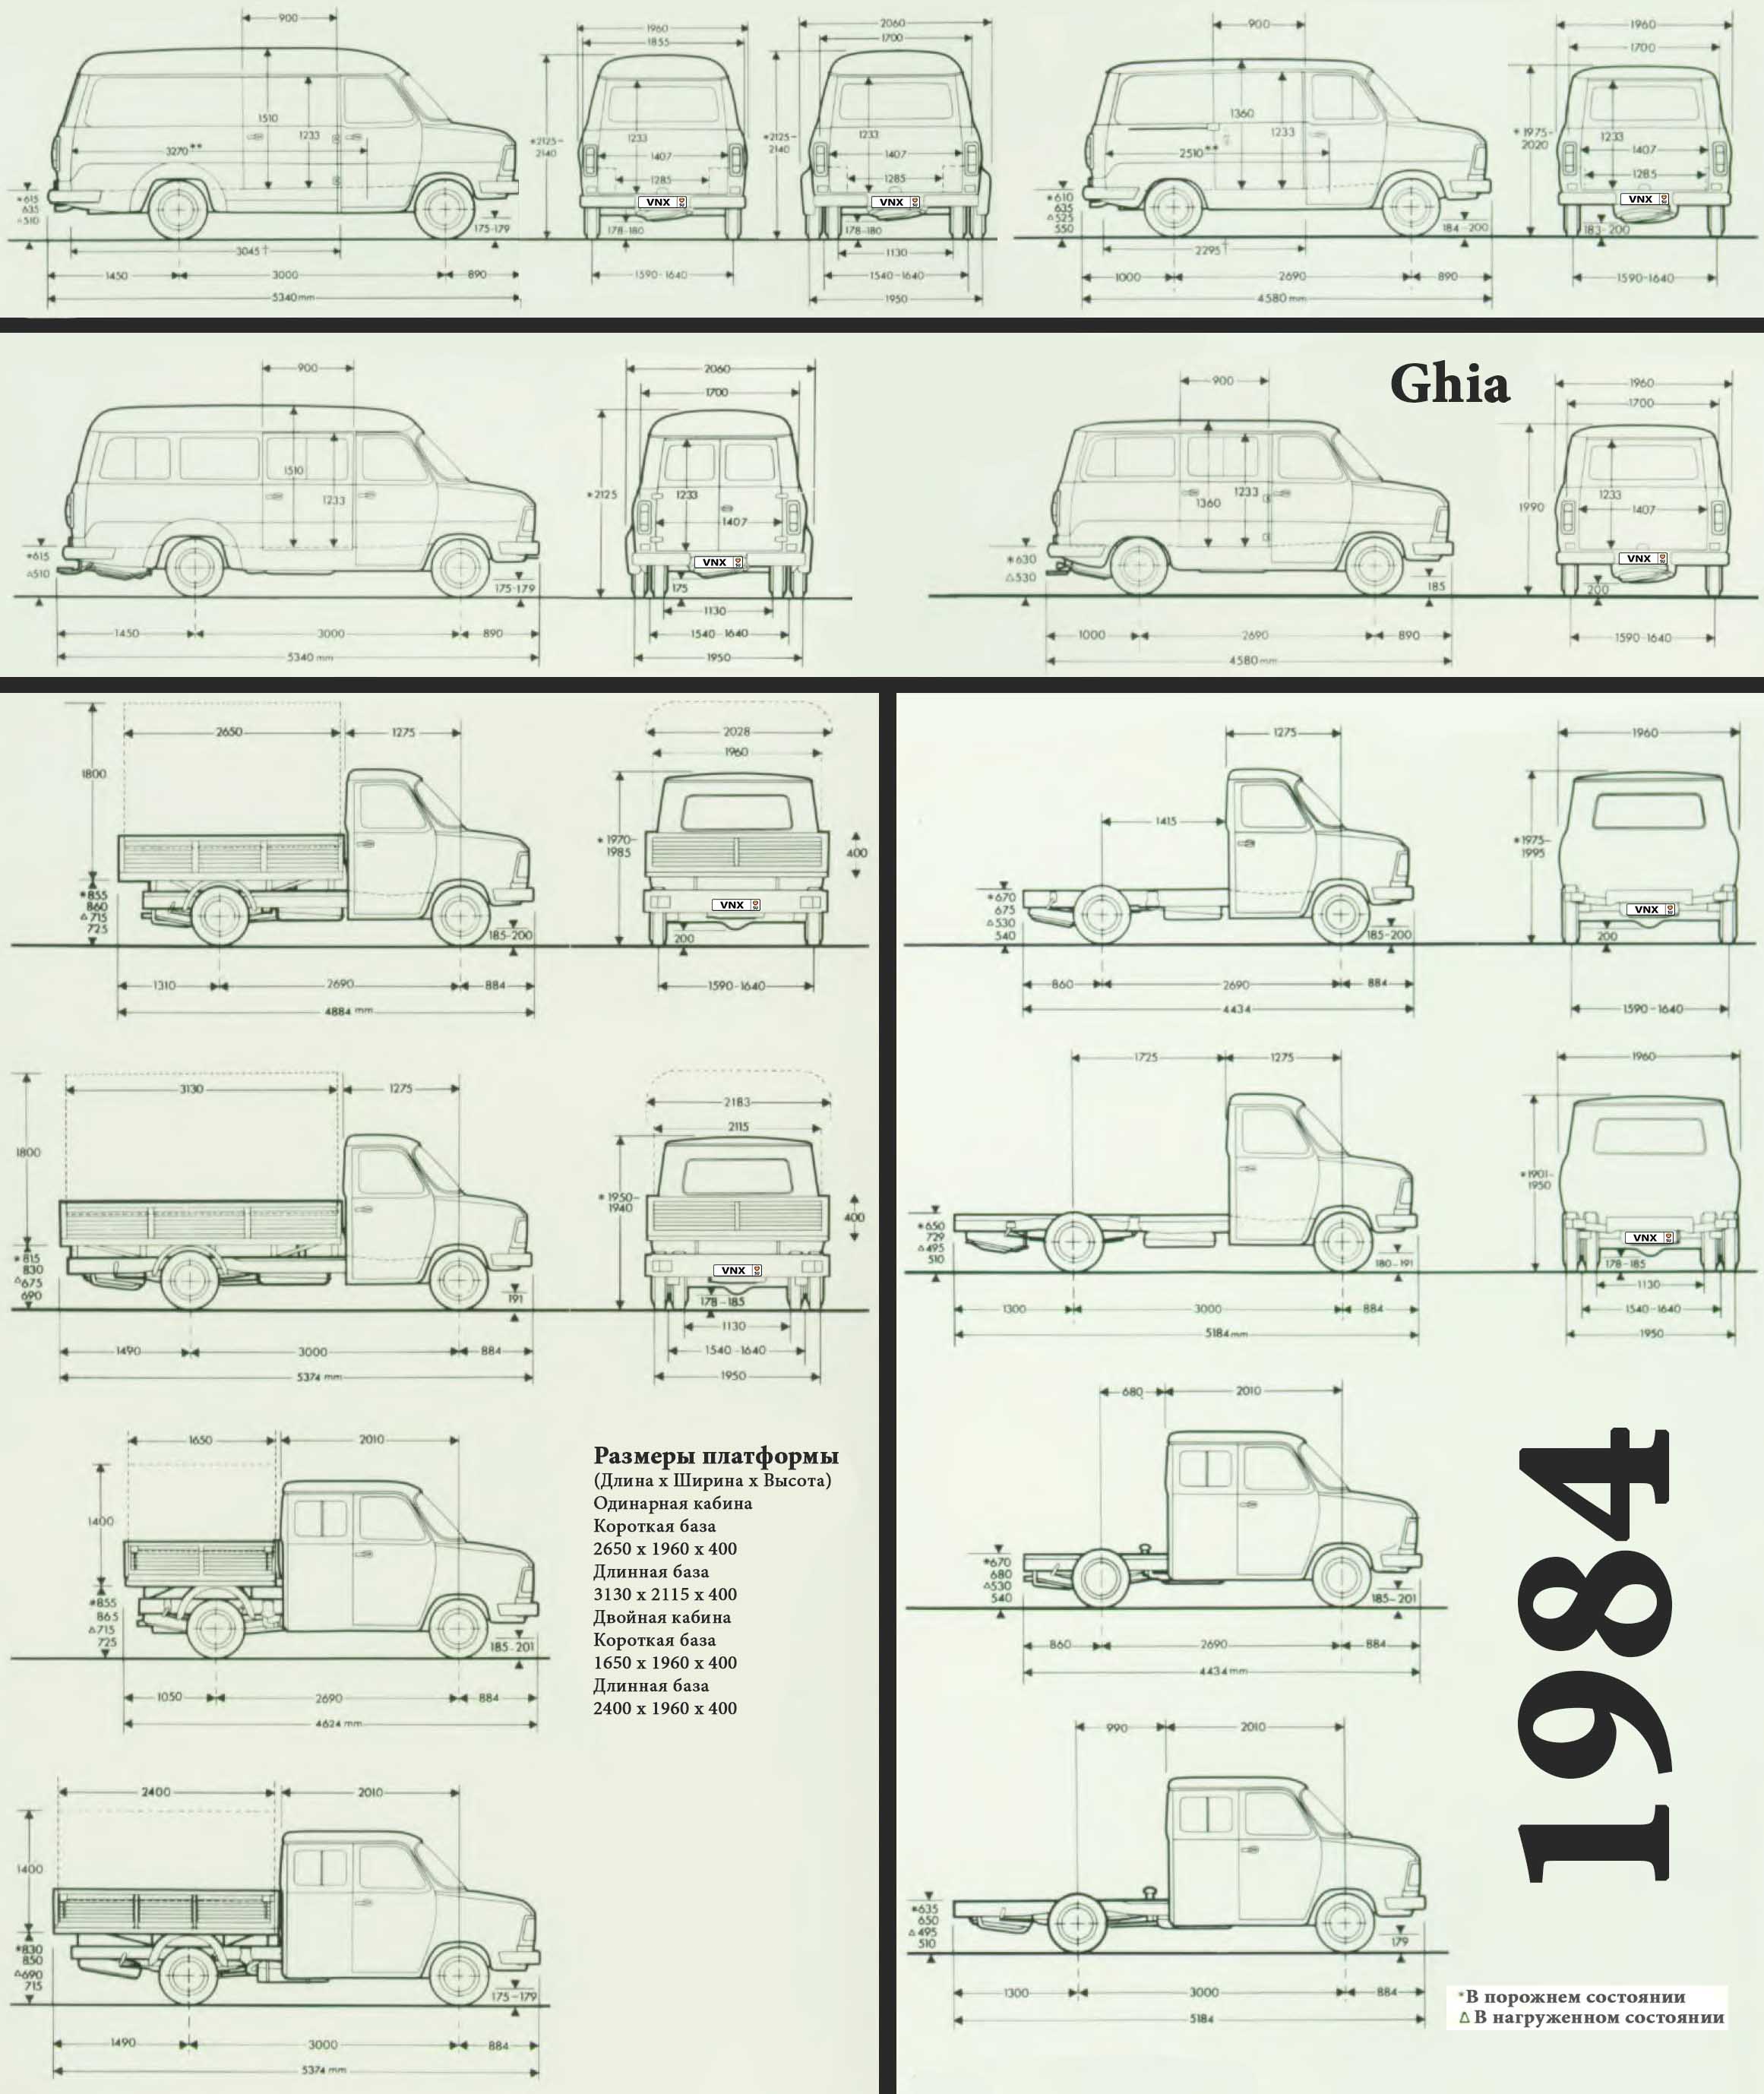 Габаритные размеры Форд Транзит 1984 (dimensions Transit Mk2)